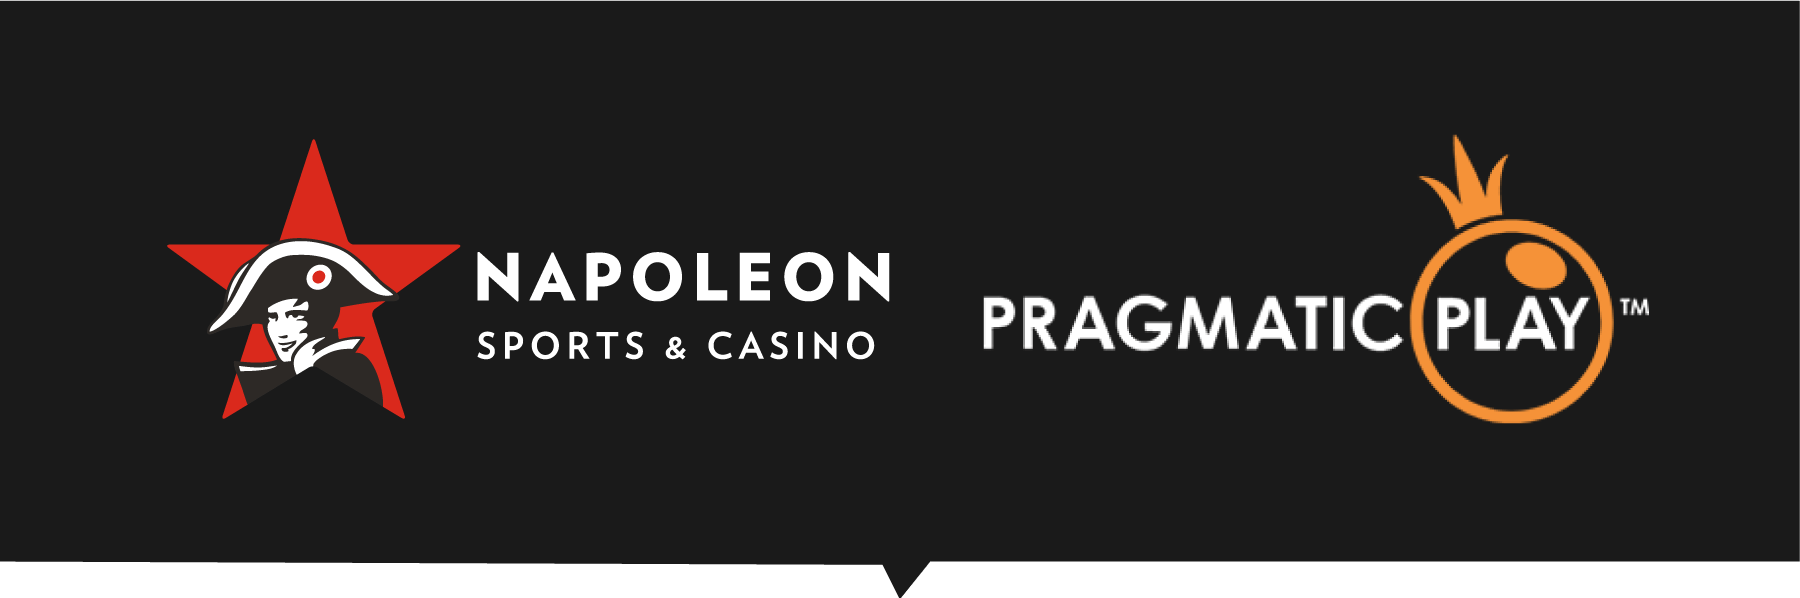 Pragmatic Play kondigt samenwerking aan met Napoleon Sports en Casino